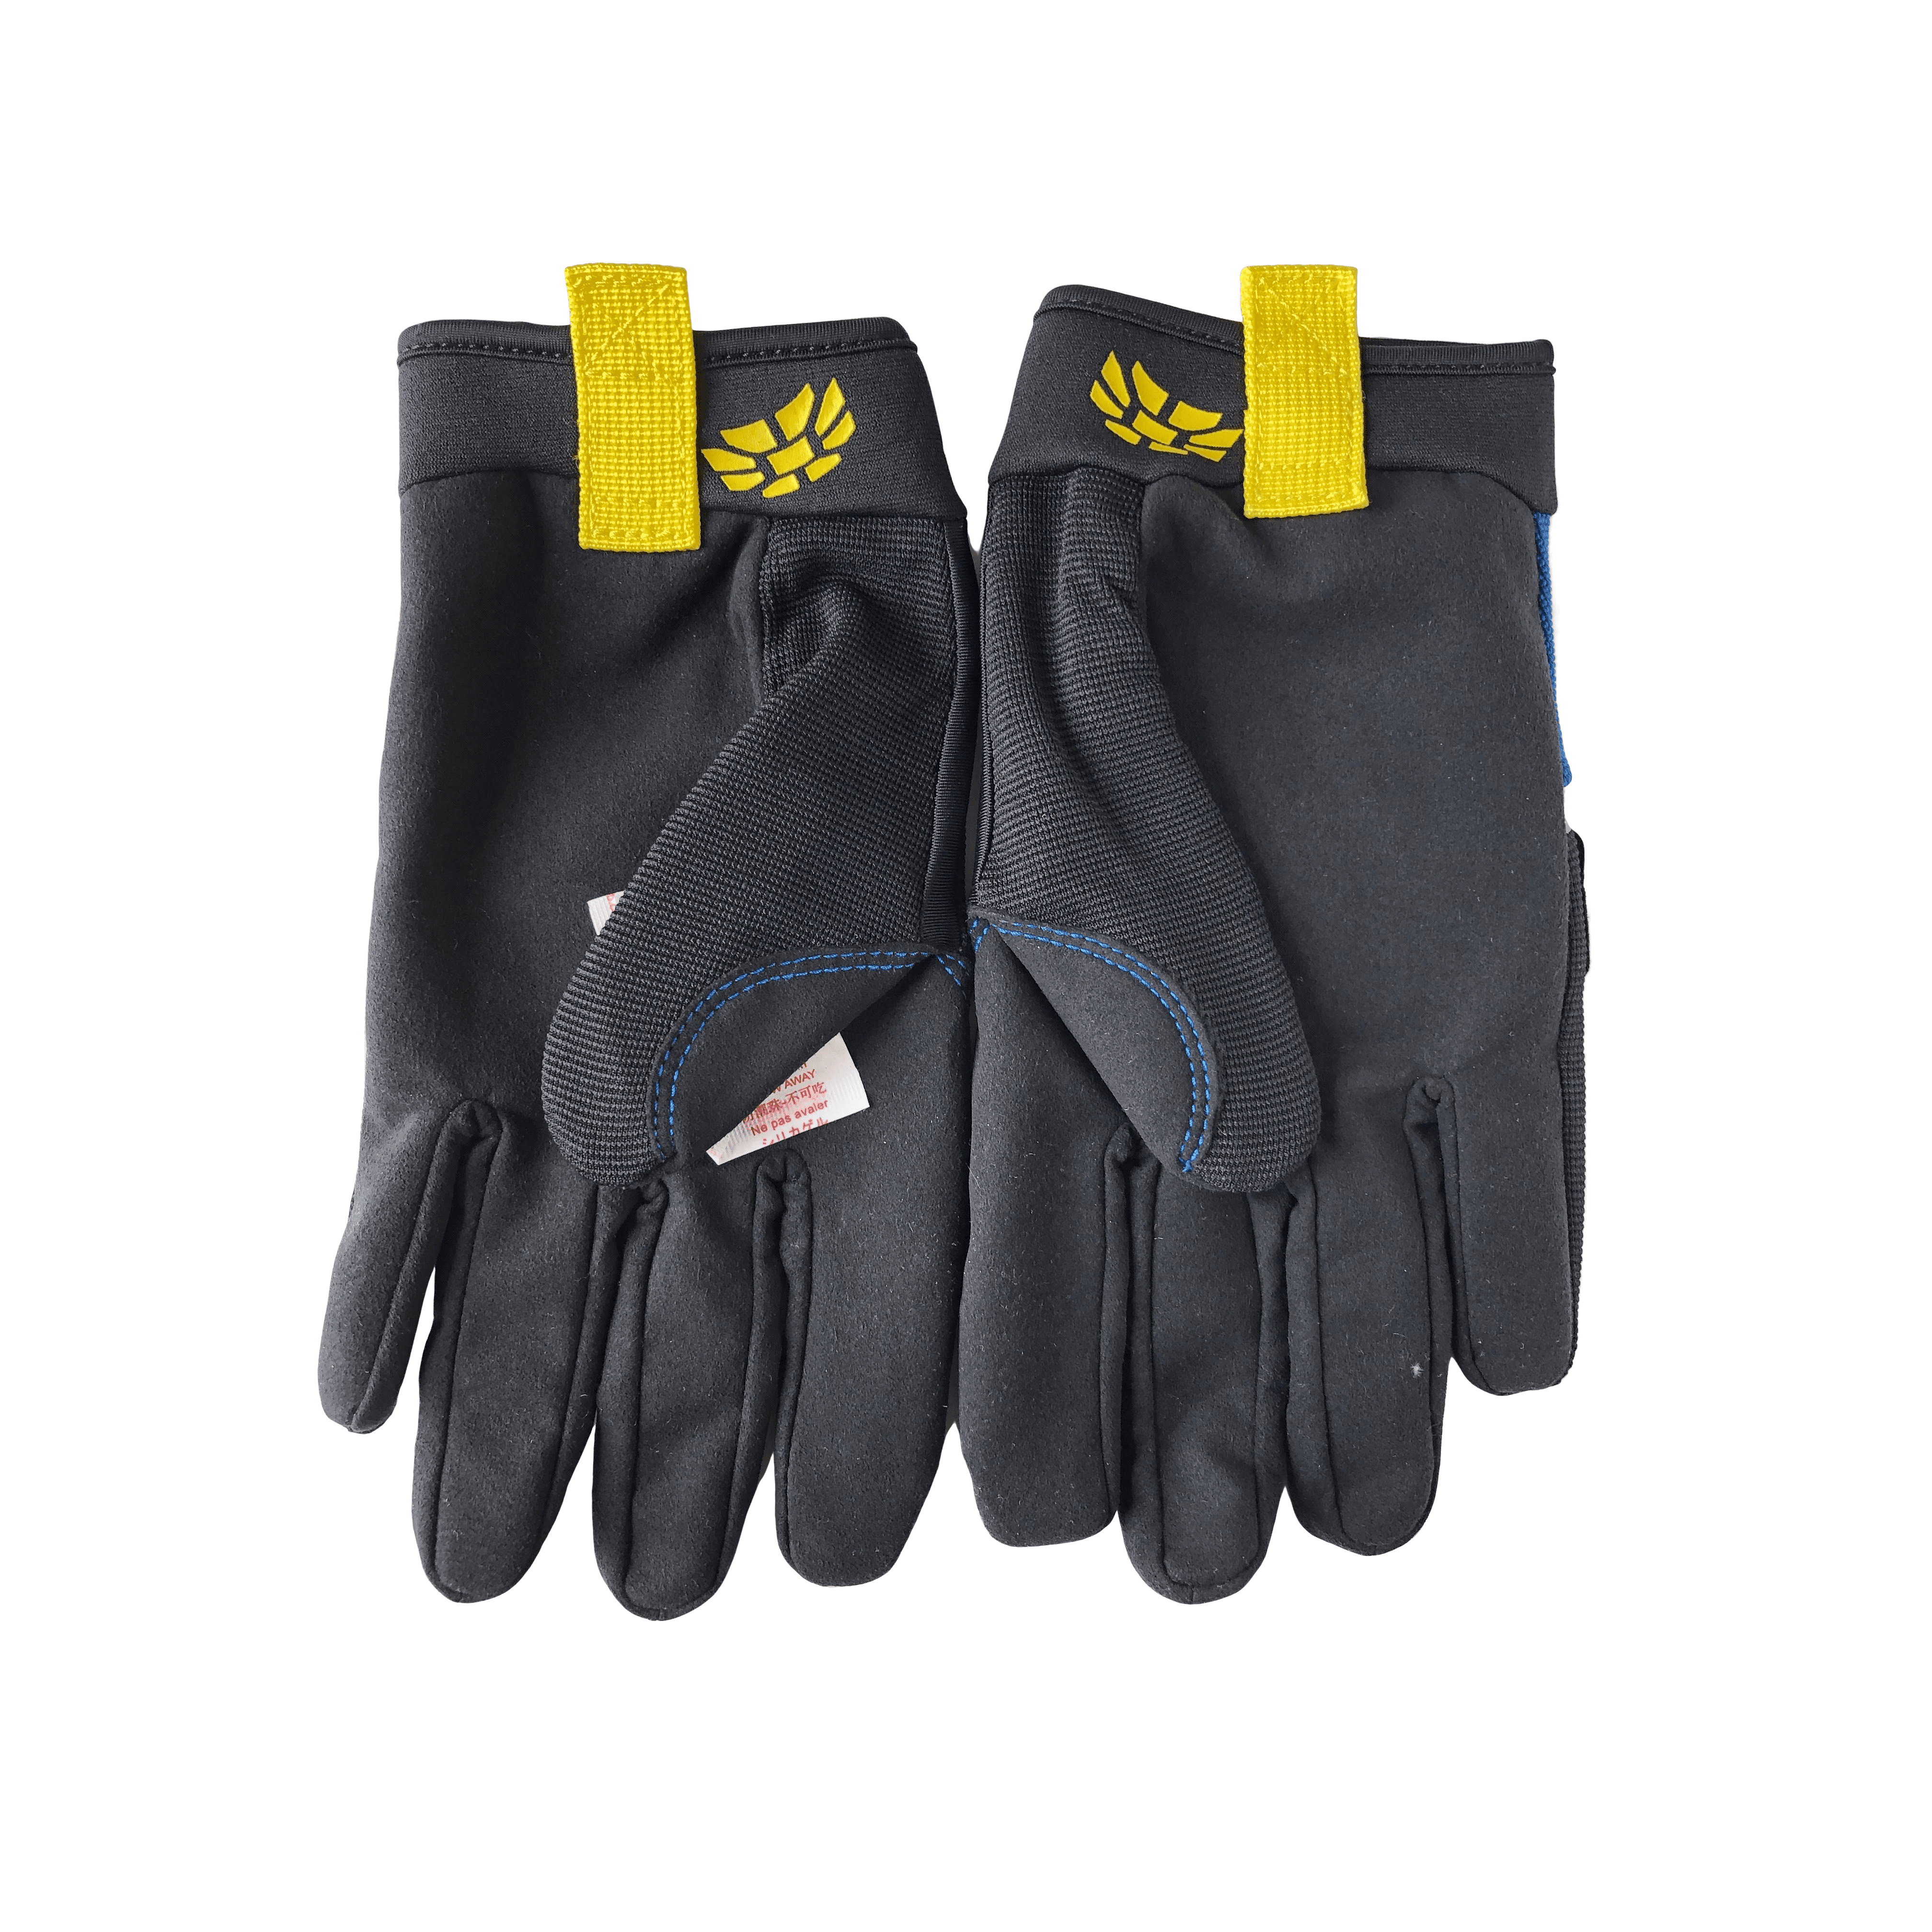 Hex Armor Chrome Series Mechanic Works gloves Size 9/L